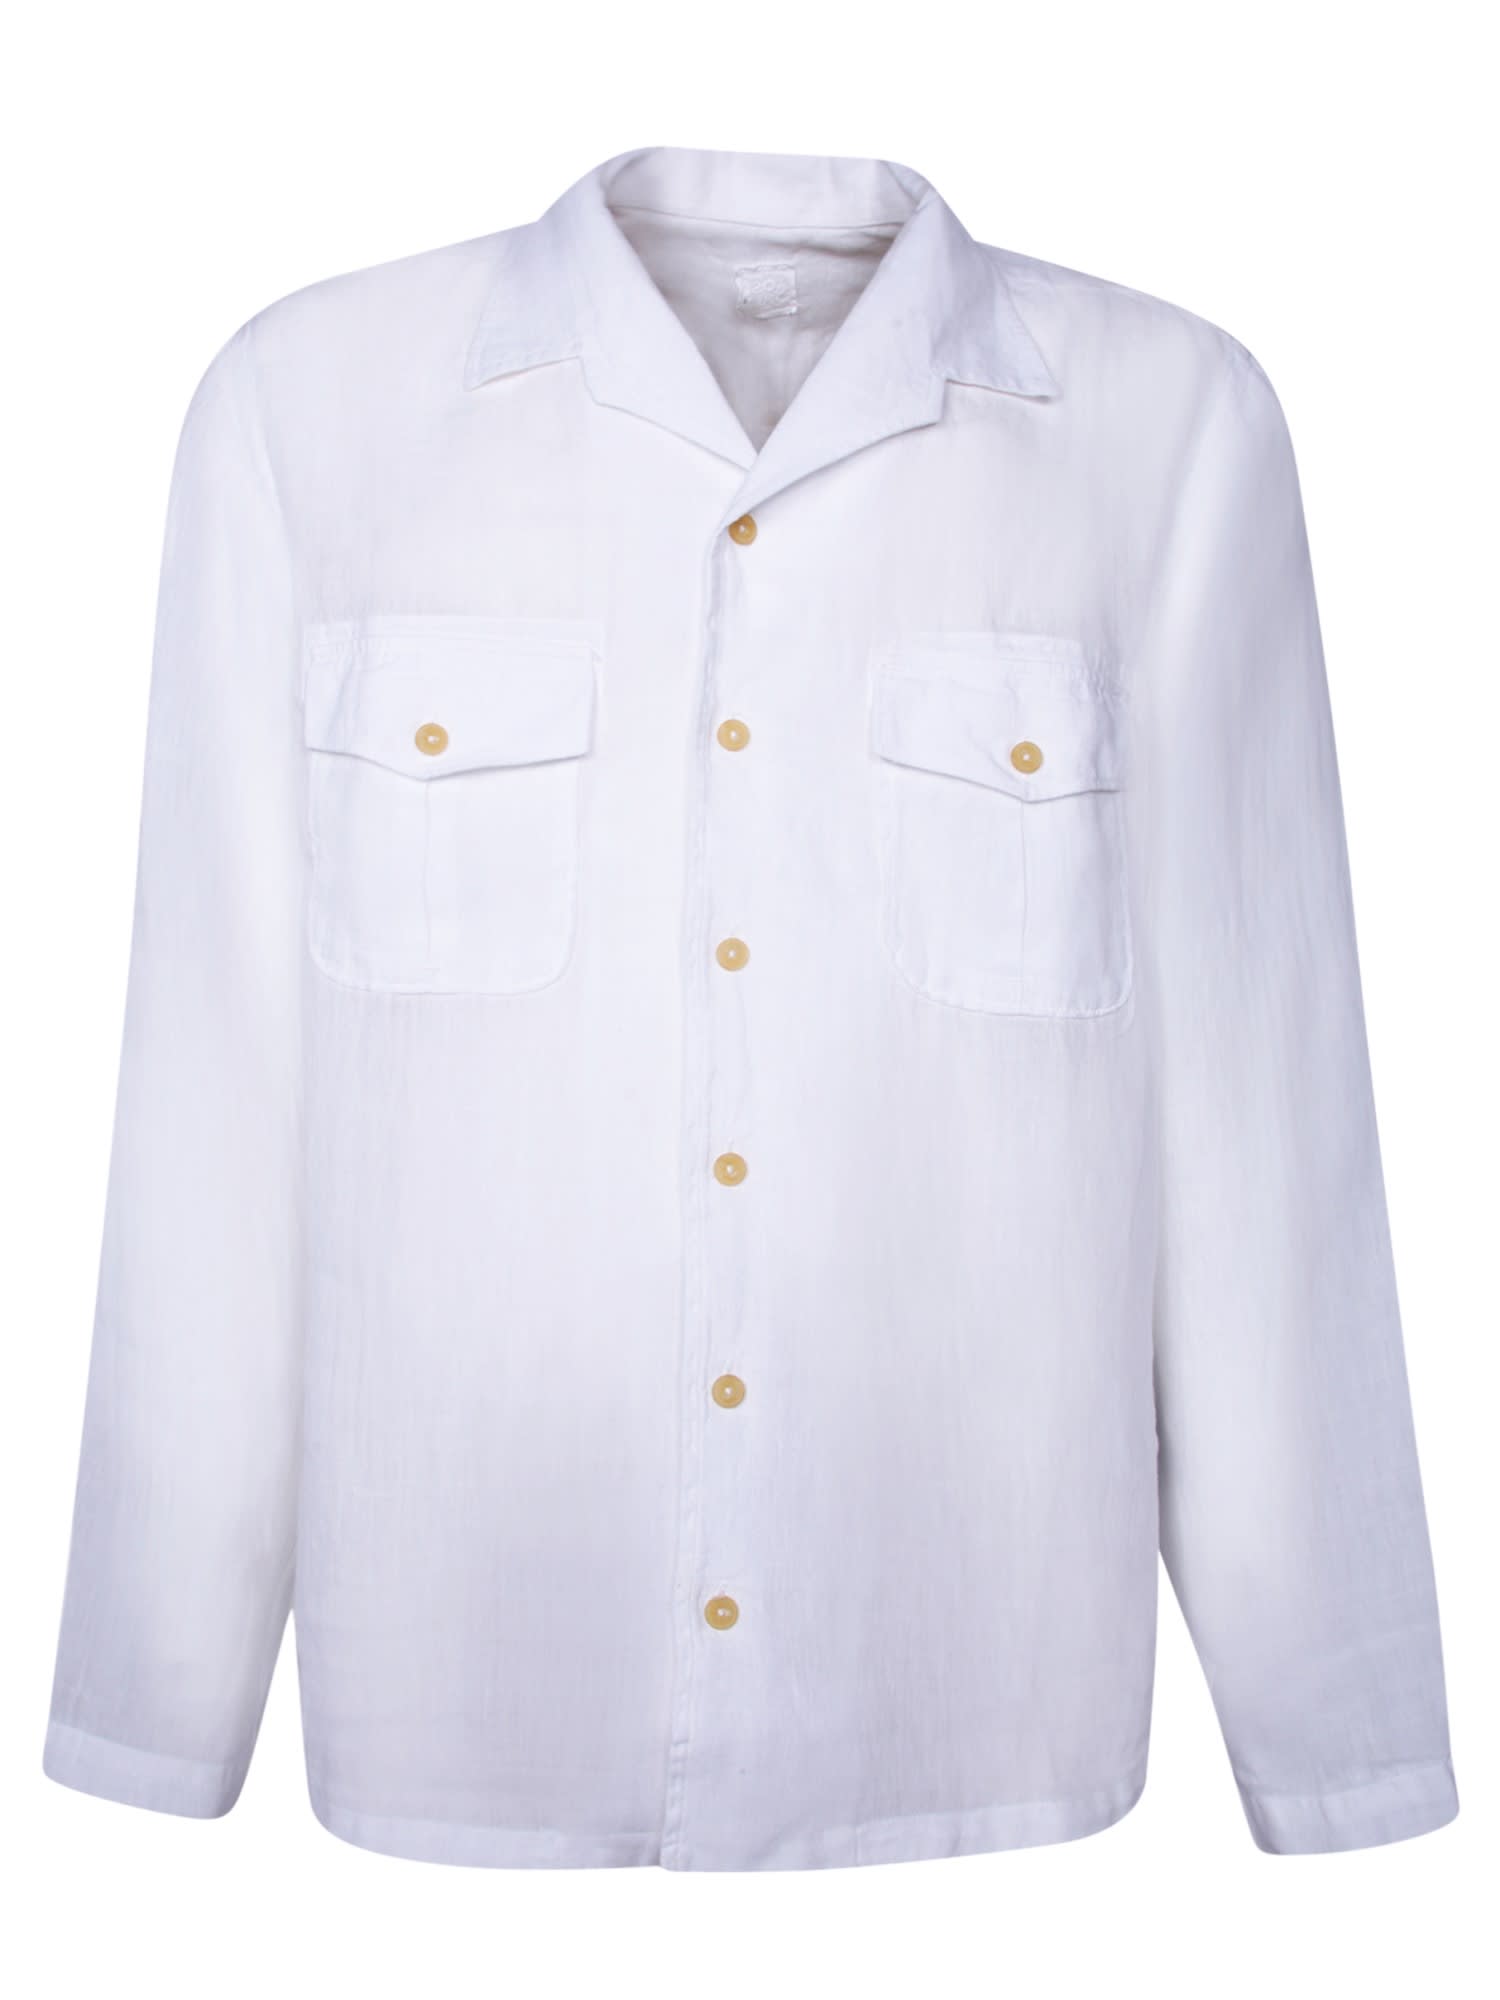 Shop 120% Lino White Linen Dbl Pocket Shirt